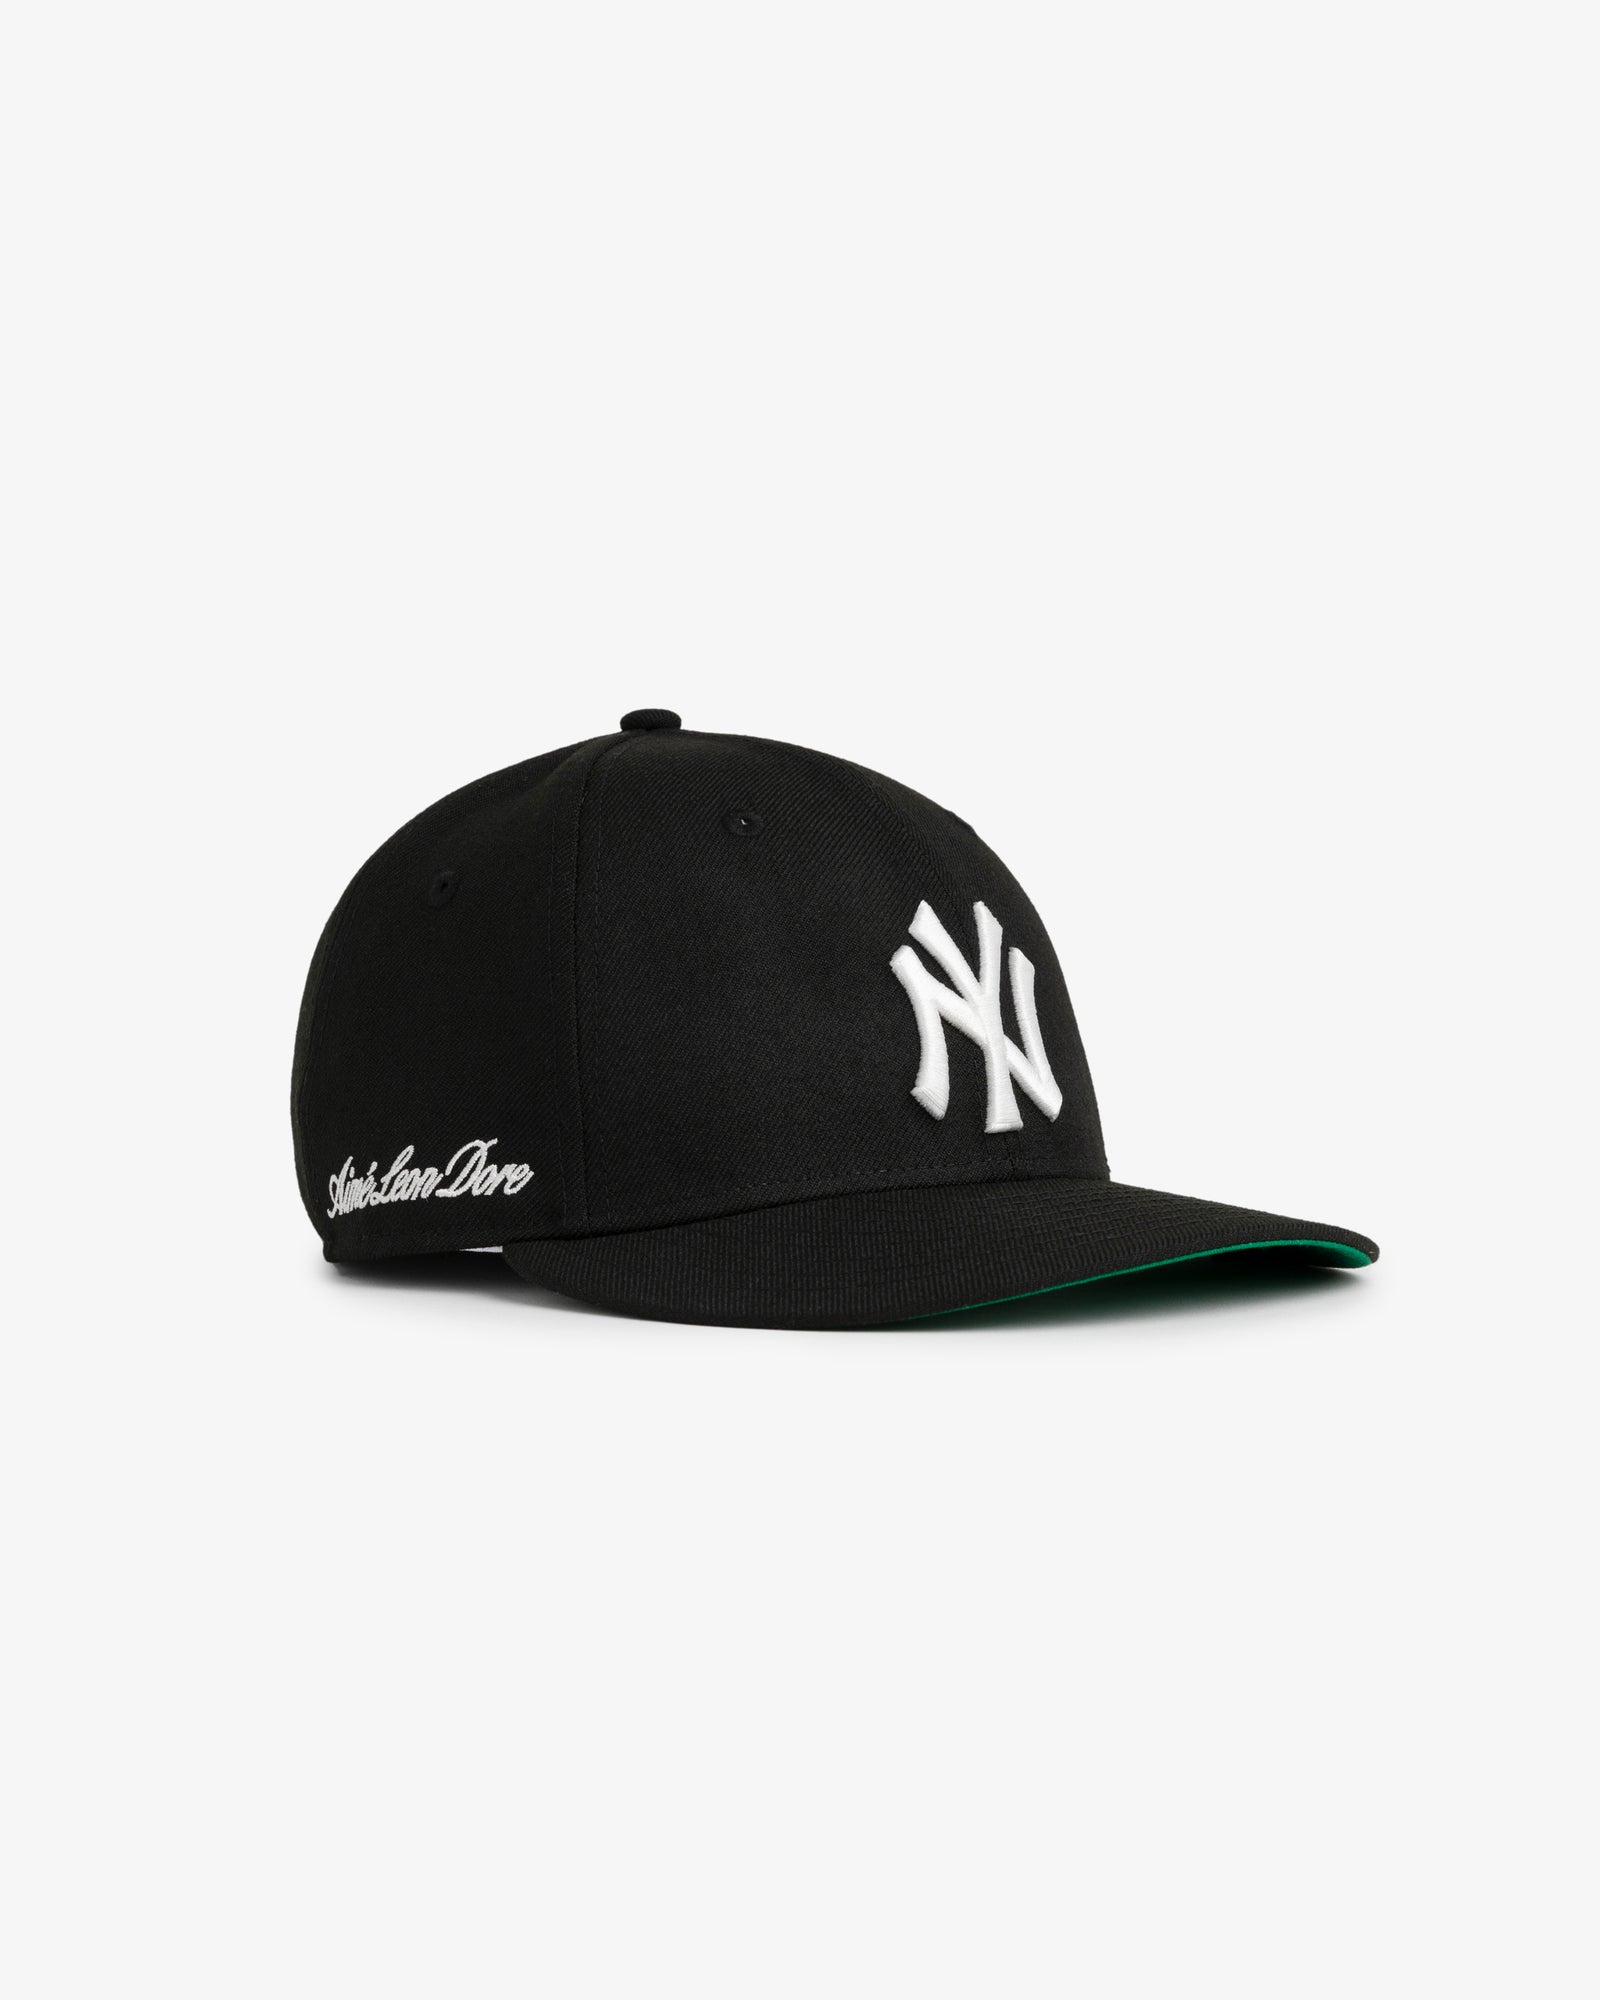 【7 1/2】ALD / New Era Yankees Mesh Hat